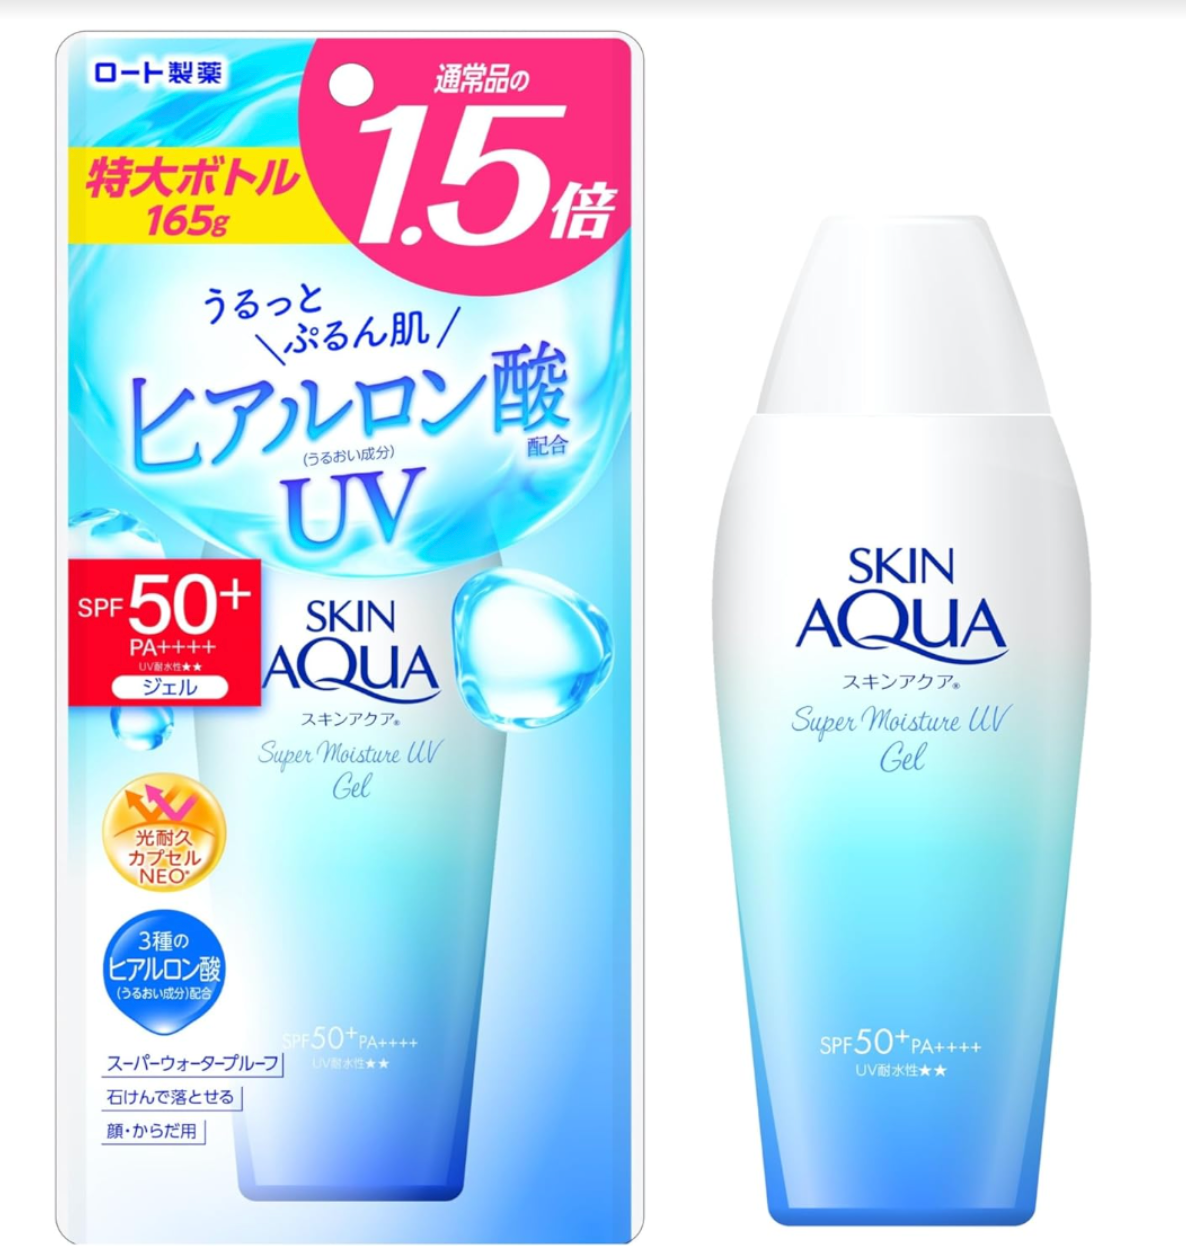 Skin Aqua Super Moisture Gel 165g